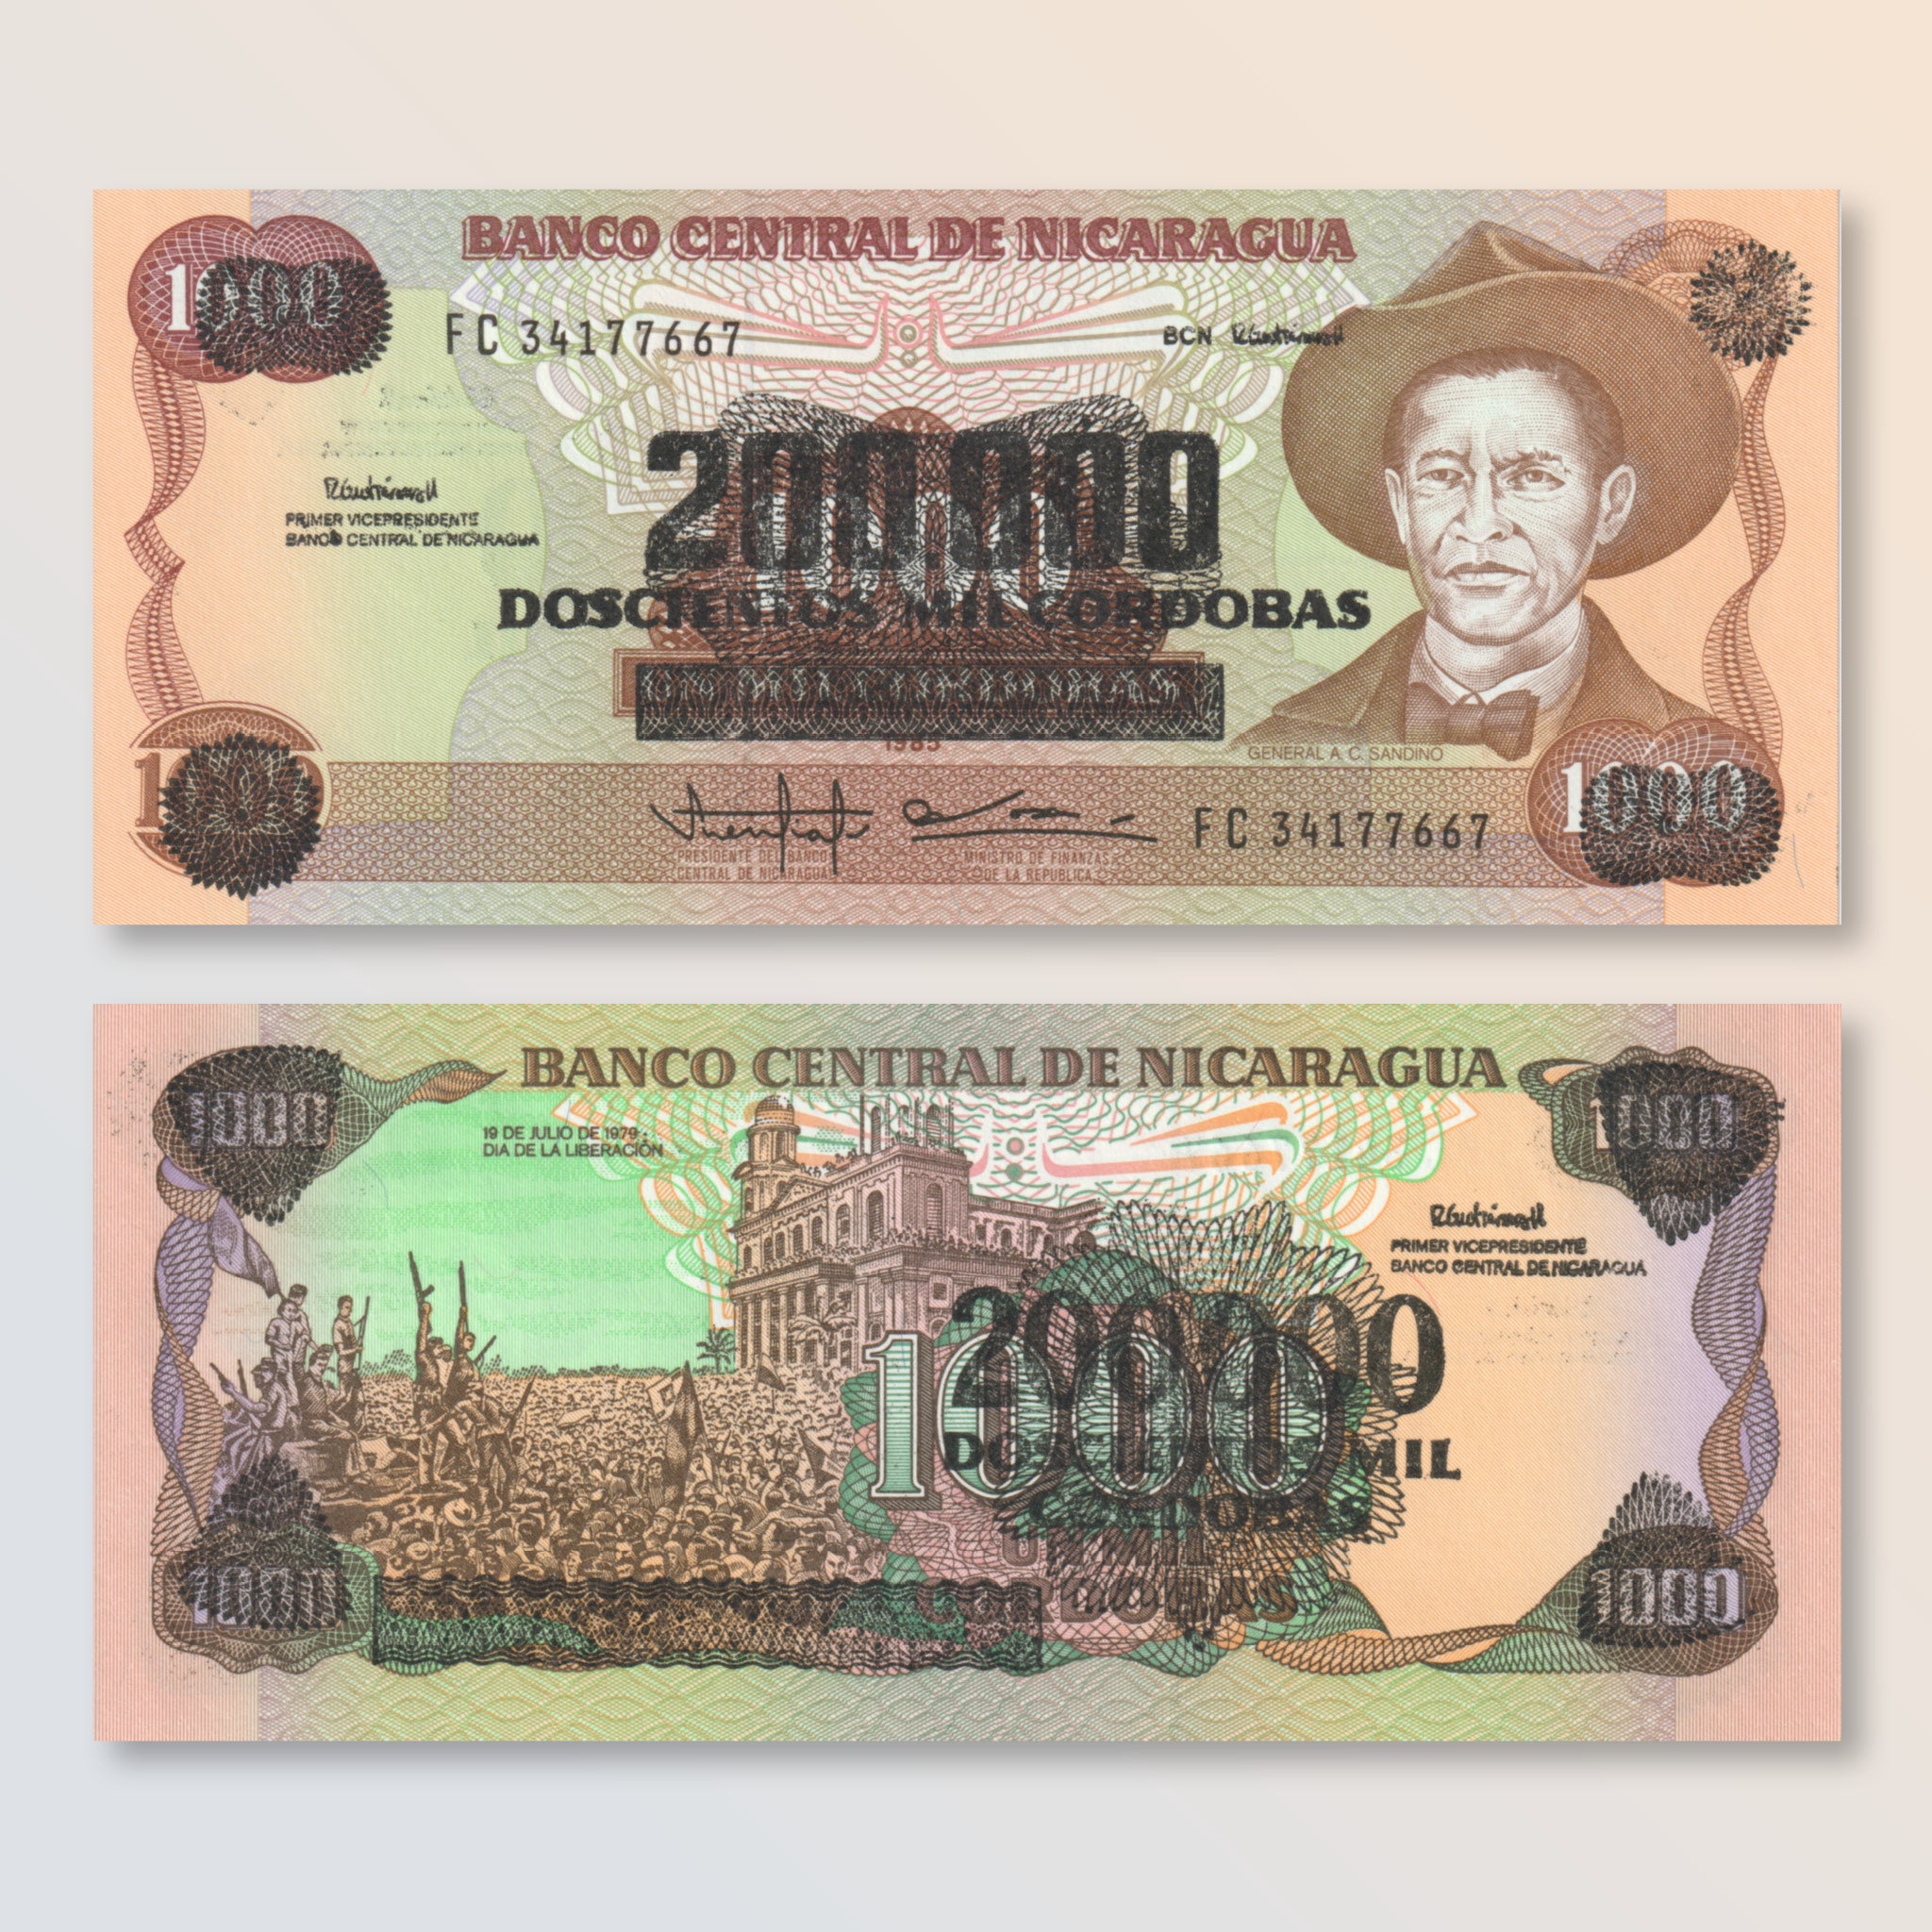 Nicaragua 200000 Córdobas, 1985 (1990), B456a, P162, UNC - Robert's World Money - World Banknotes